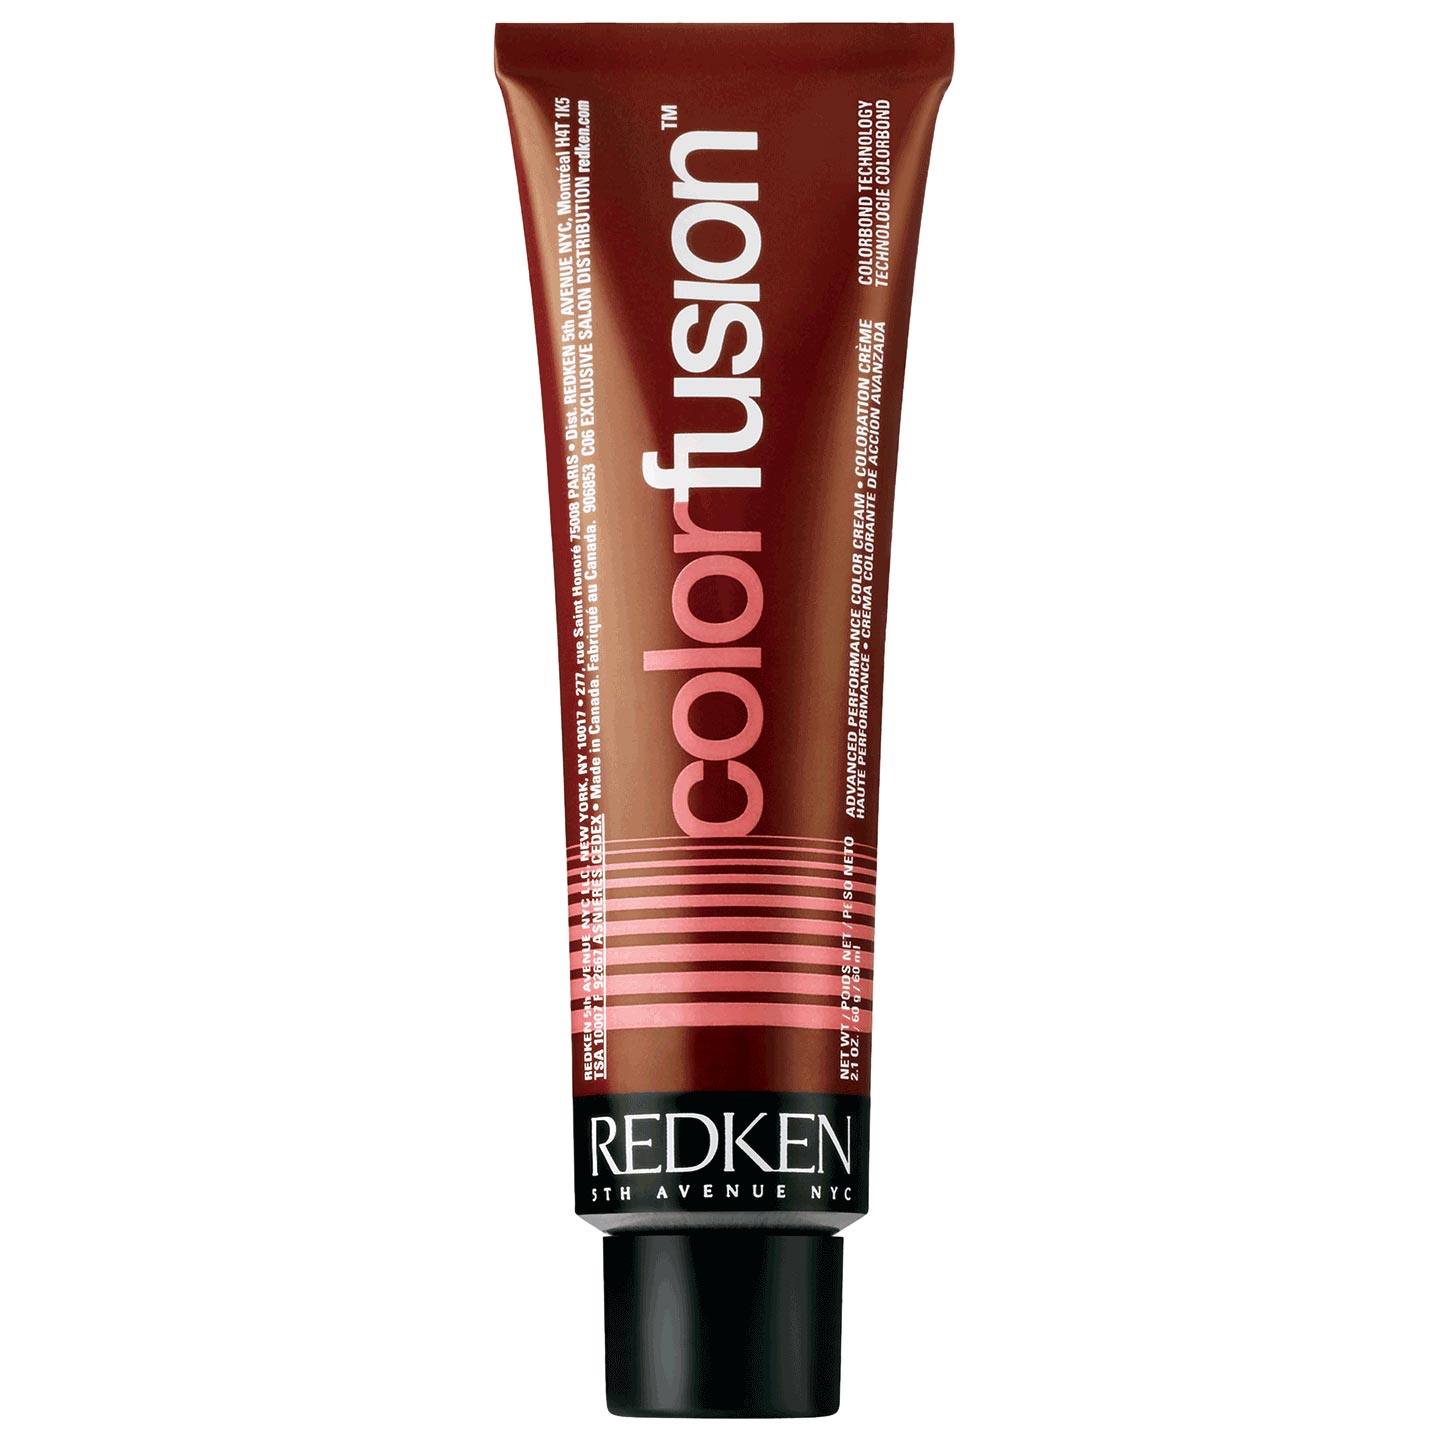 Redken Color Fusion Advanced Performance Permanent Color Cream 21 Oz Brighton Beauty Supply 